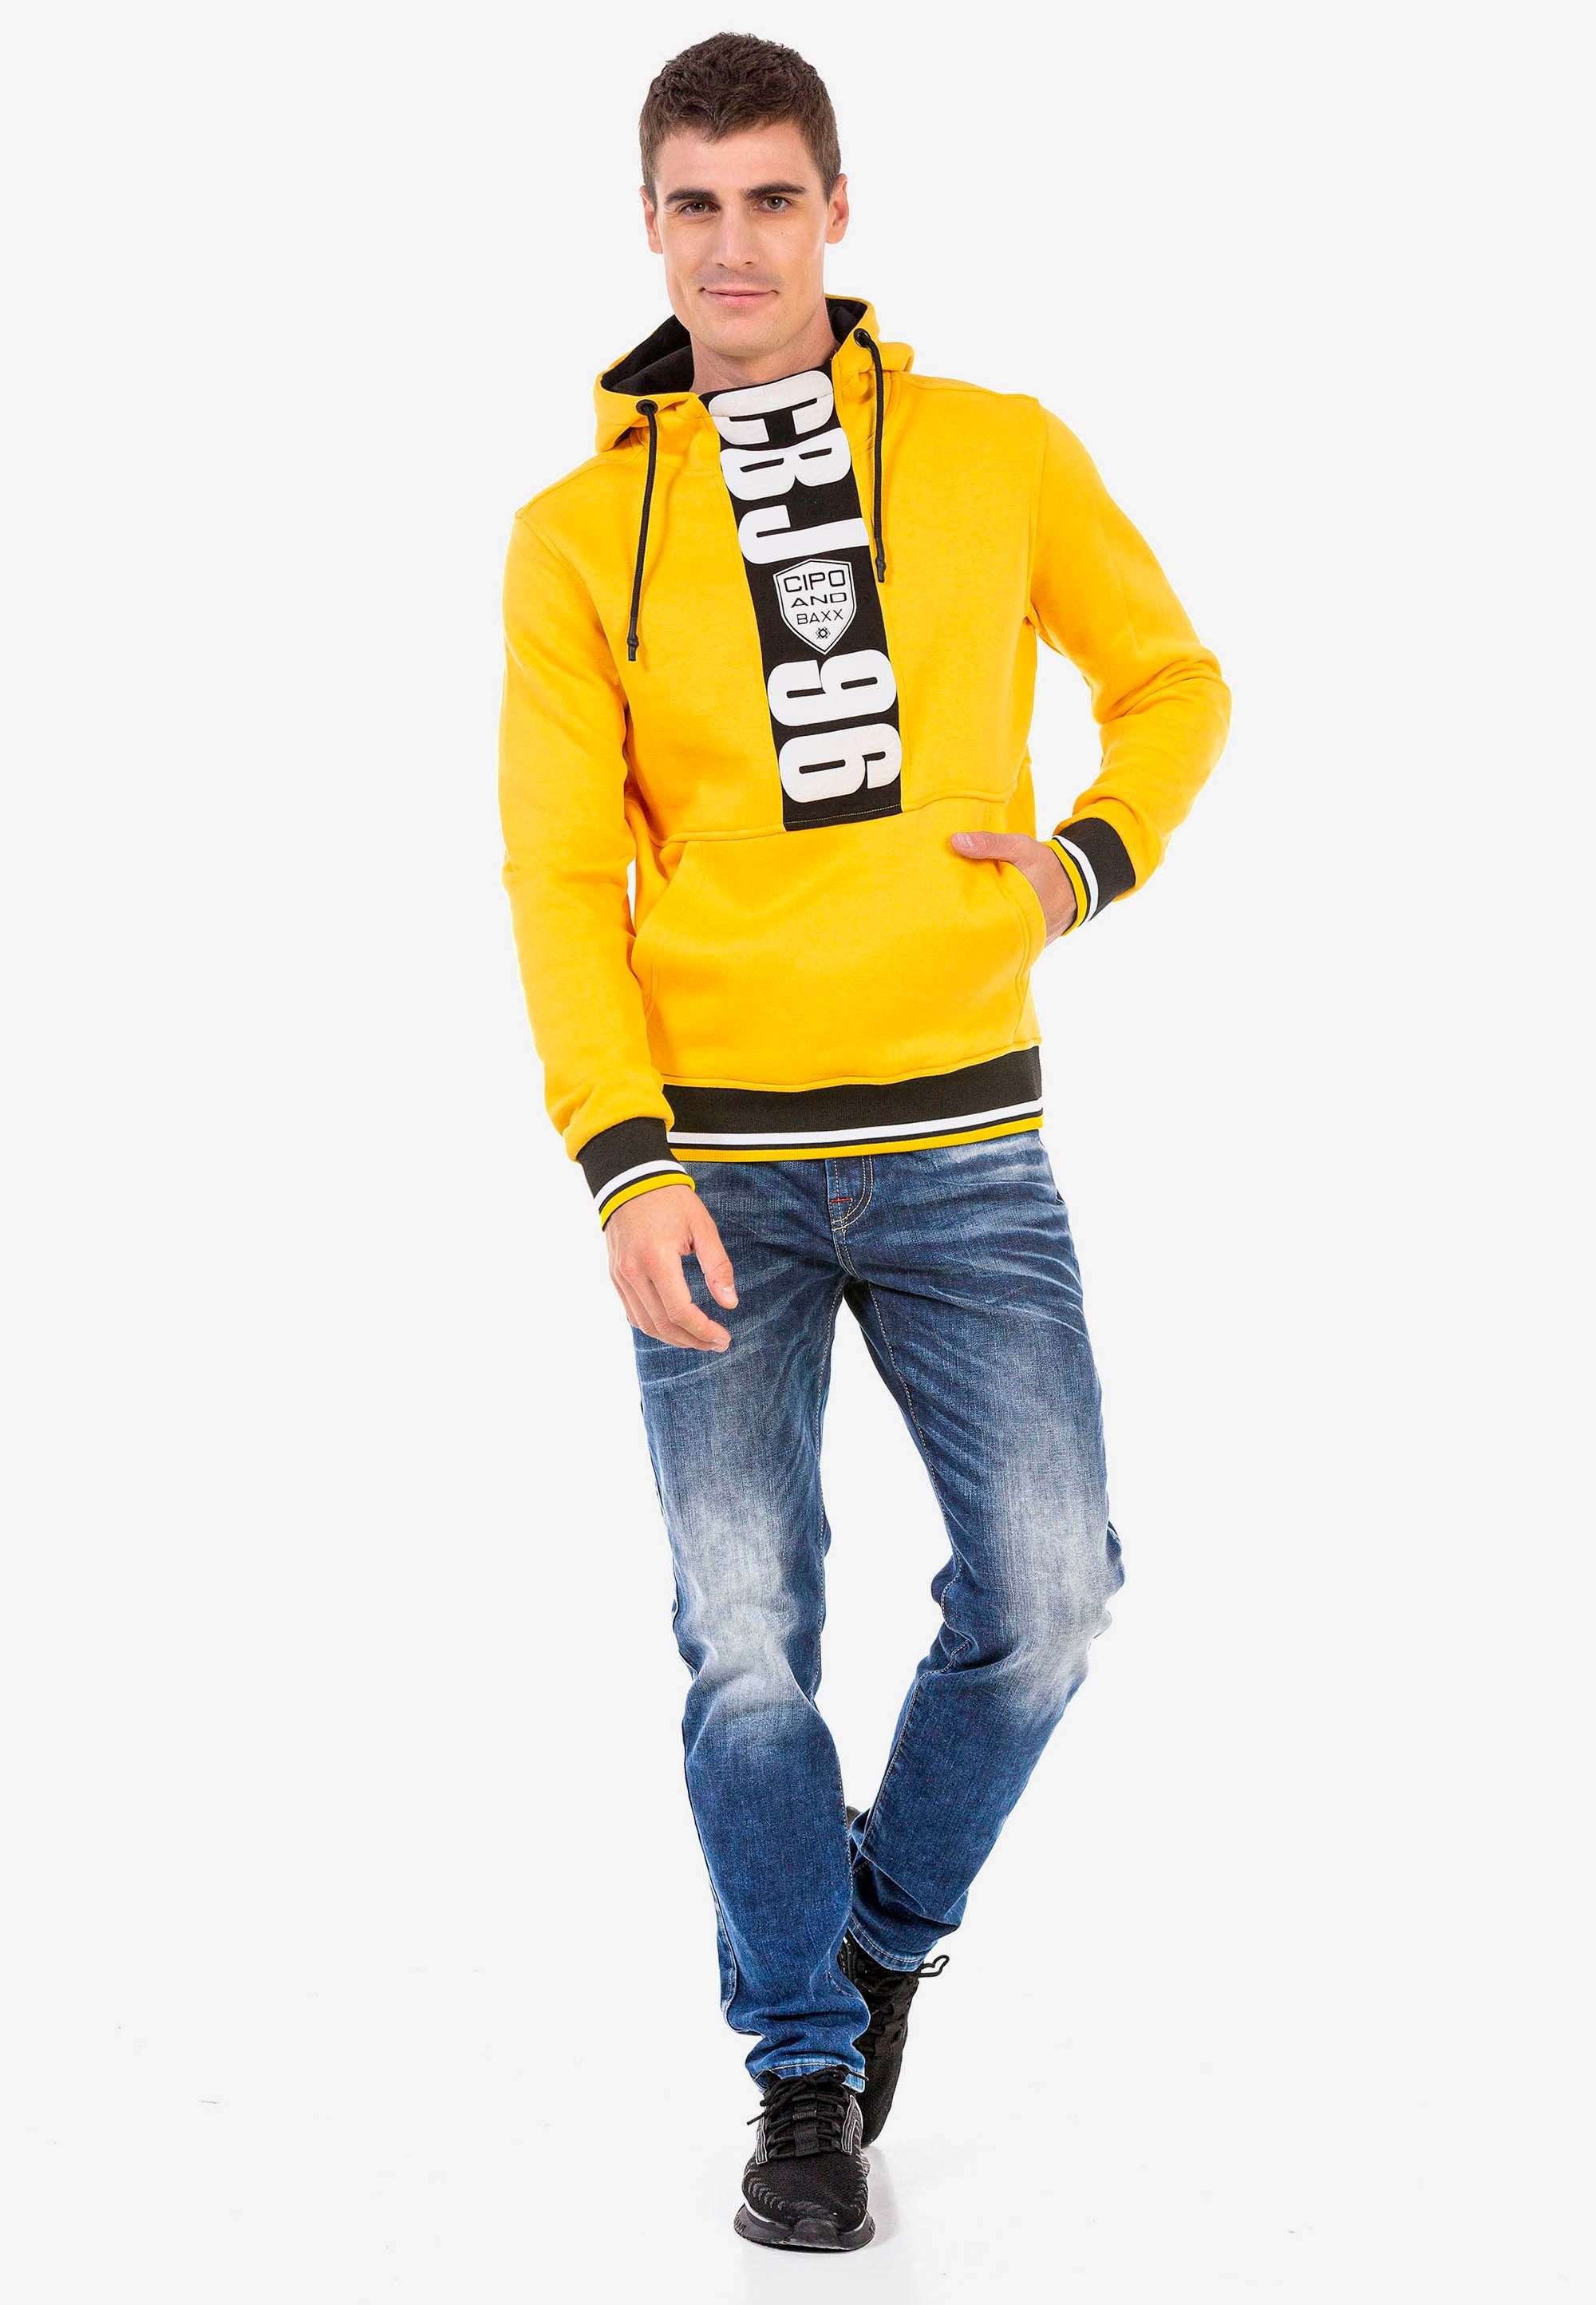 tollen Baxx Cipo gelb & Kapuzensweatshirt Markenprints mit